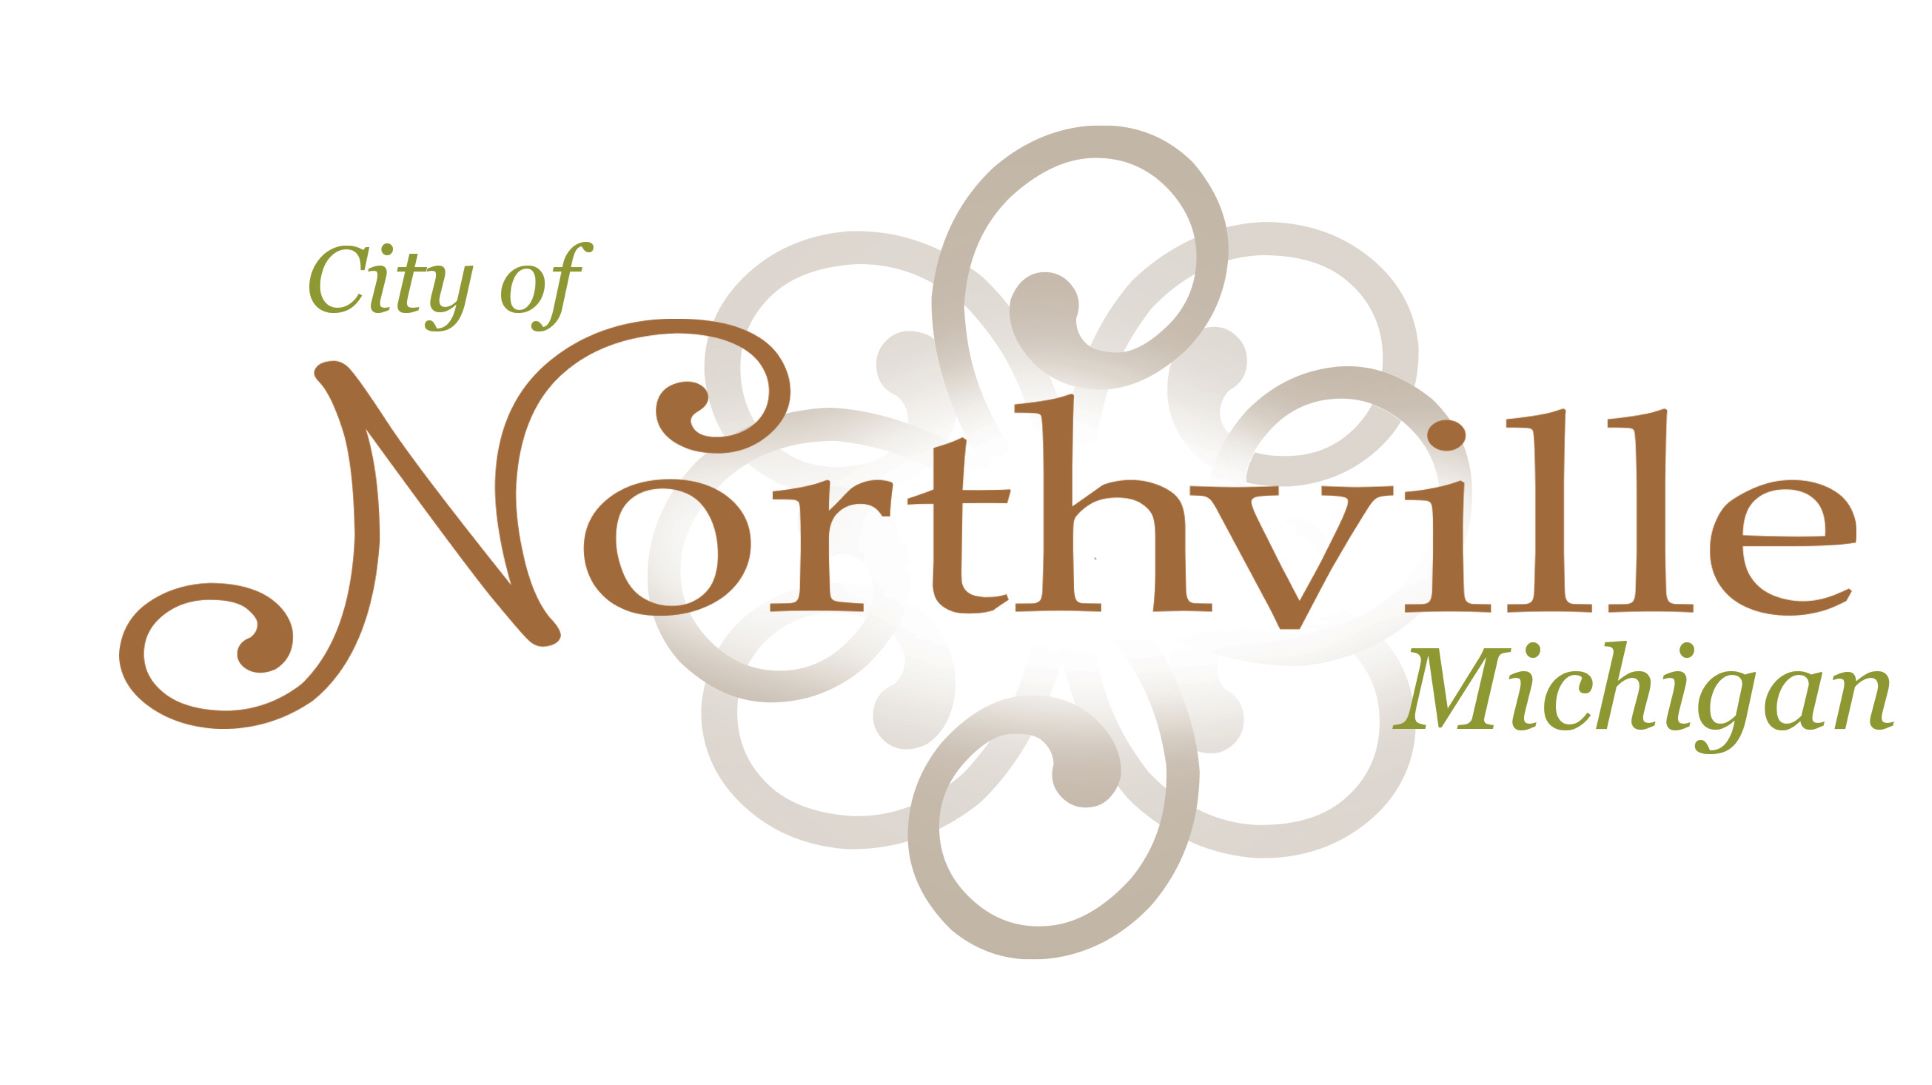 Organization logo of City of Northville